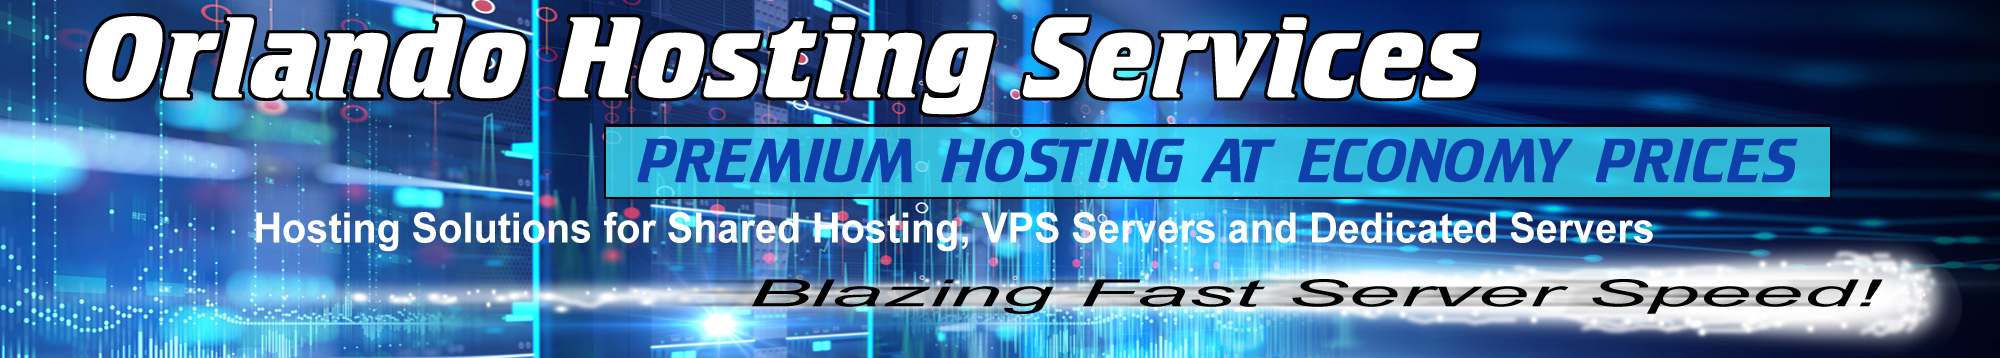 hosting services image